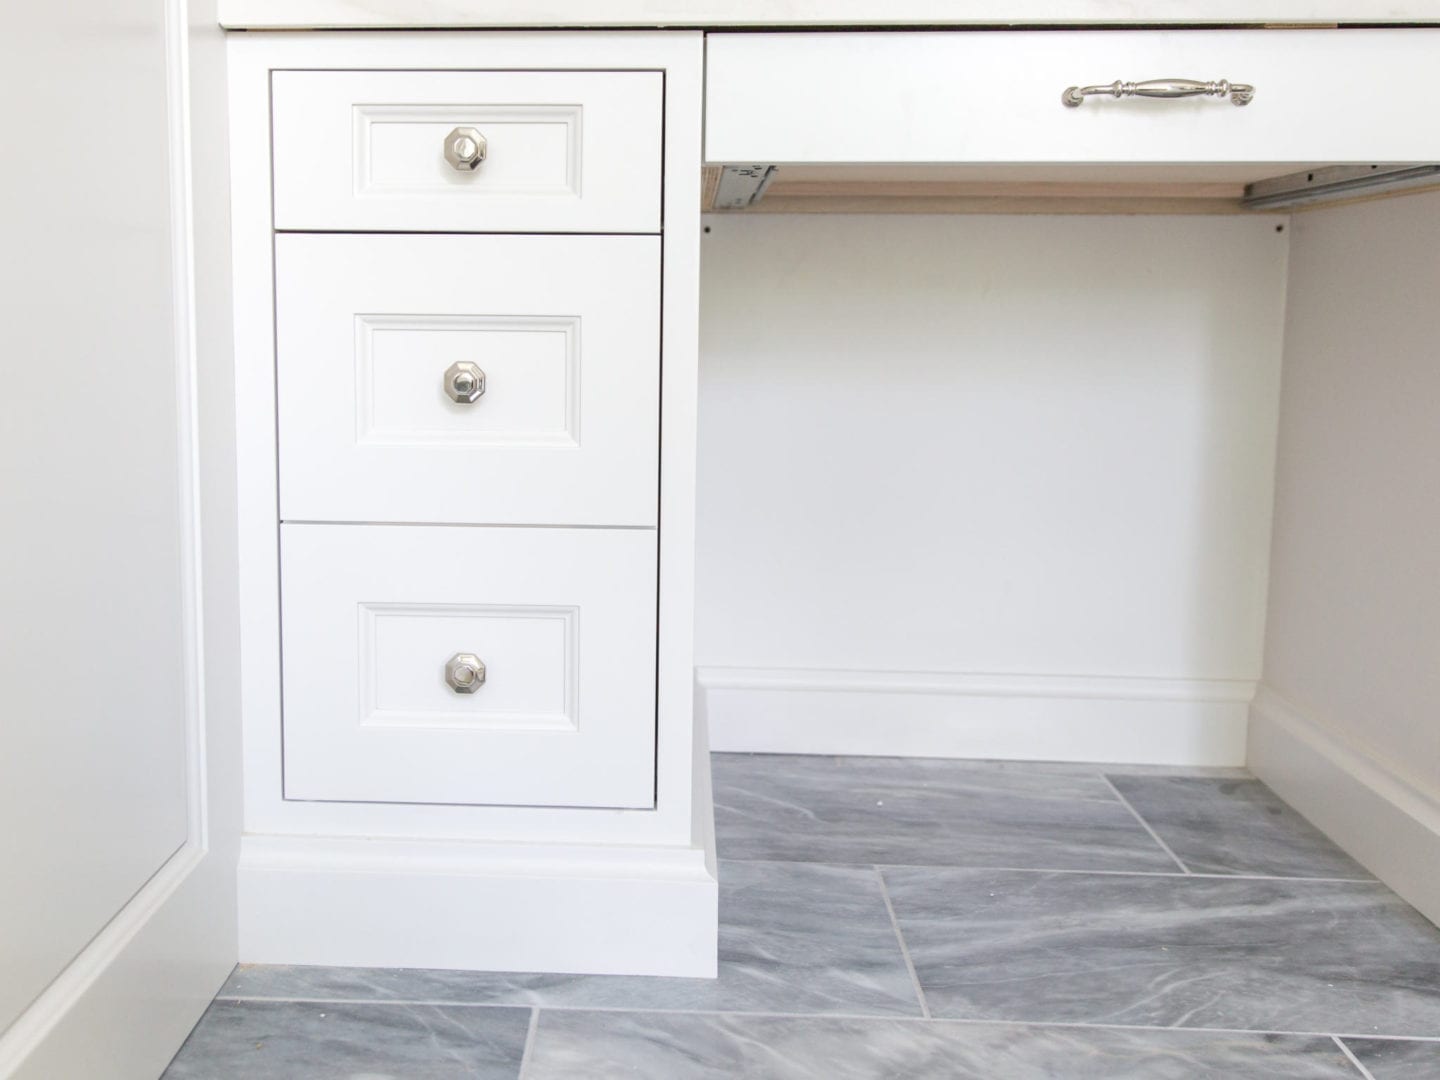 Bathroom cabinets with VESTA polished nickel hardware. Elegant hardware with gray marble floor.